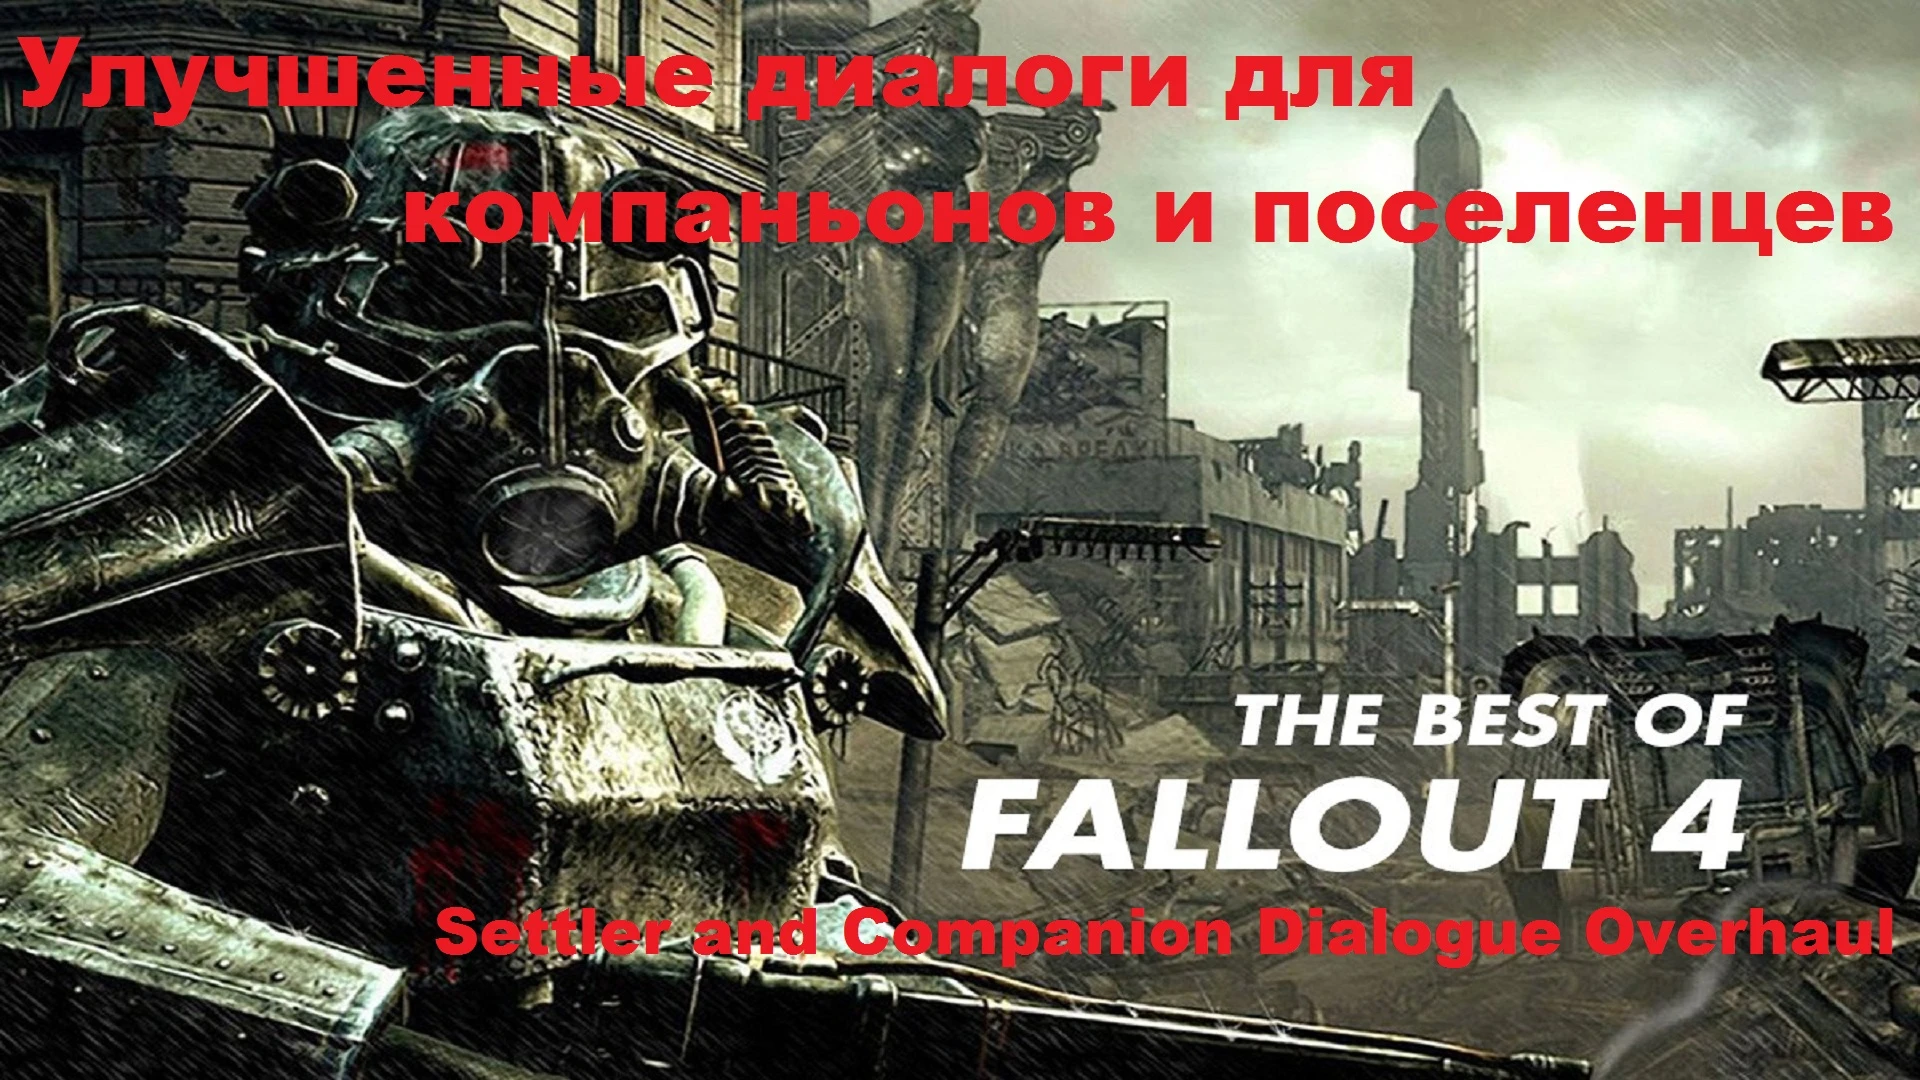 Fallout 4 settler and companion dialogue overhaul (120) фото